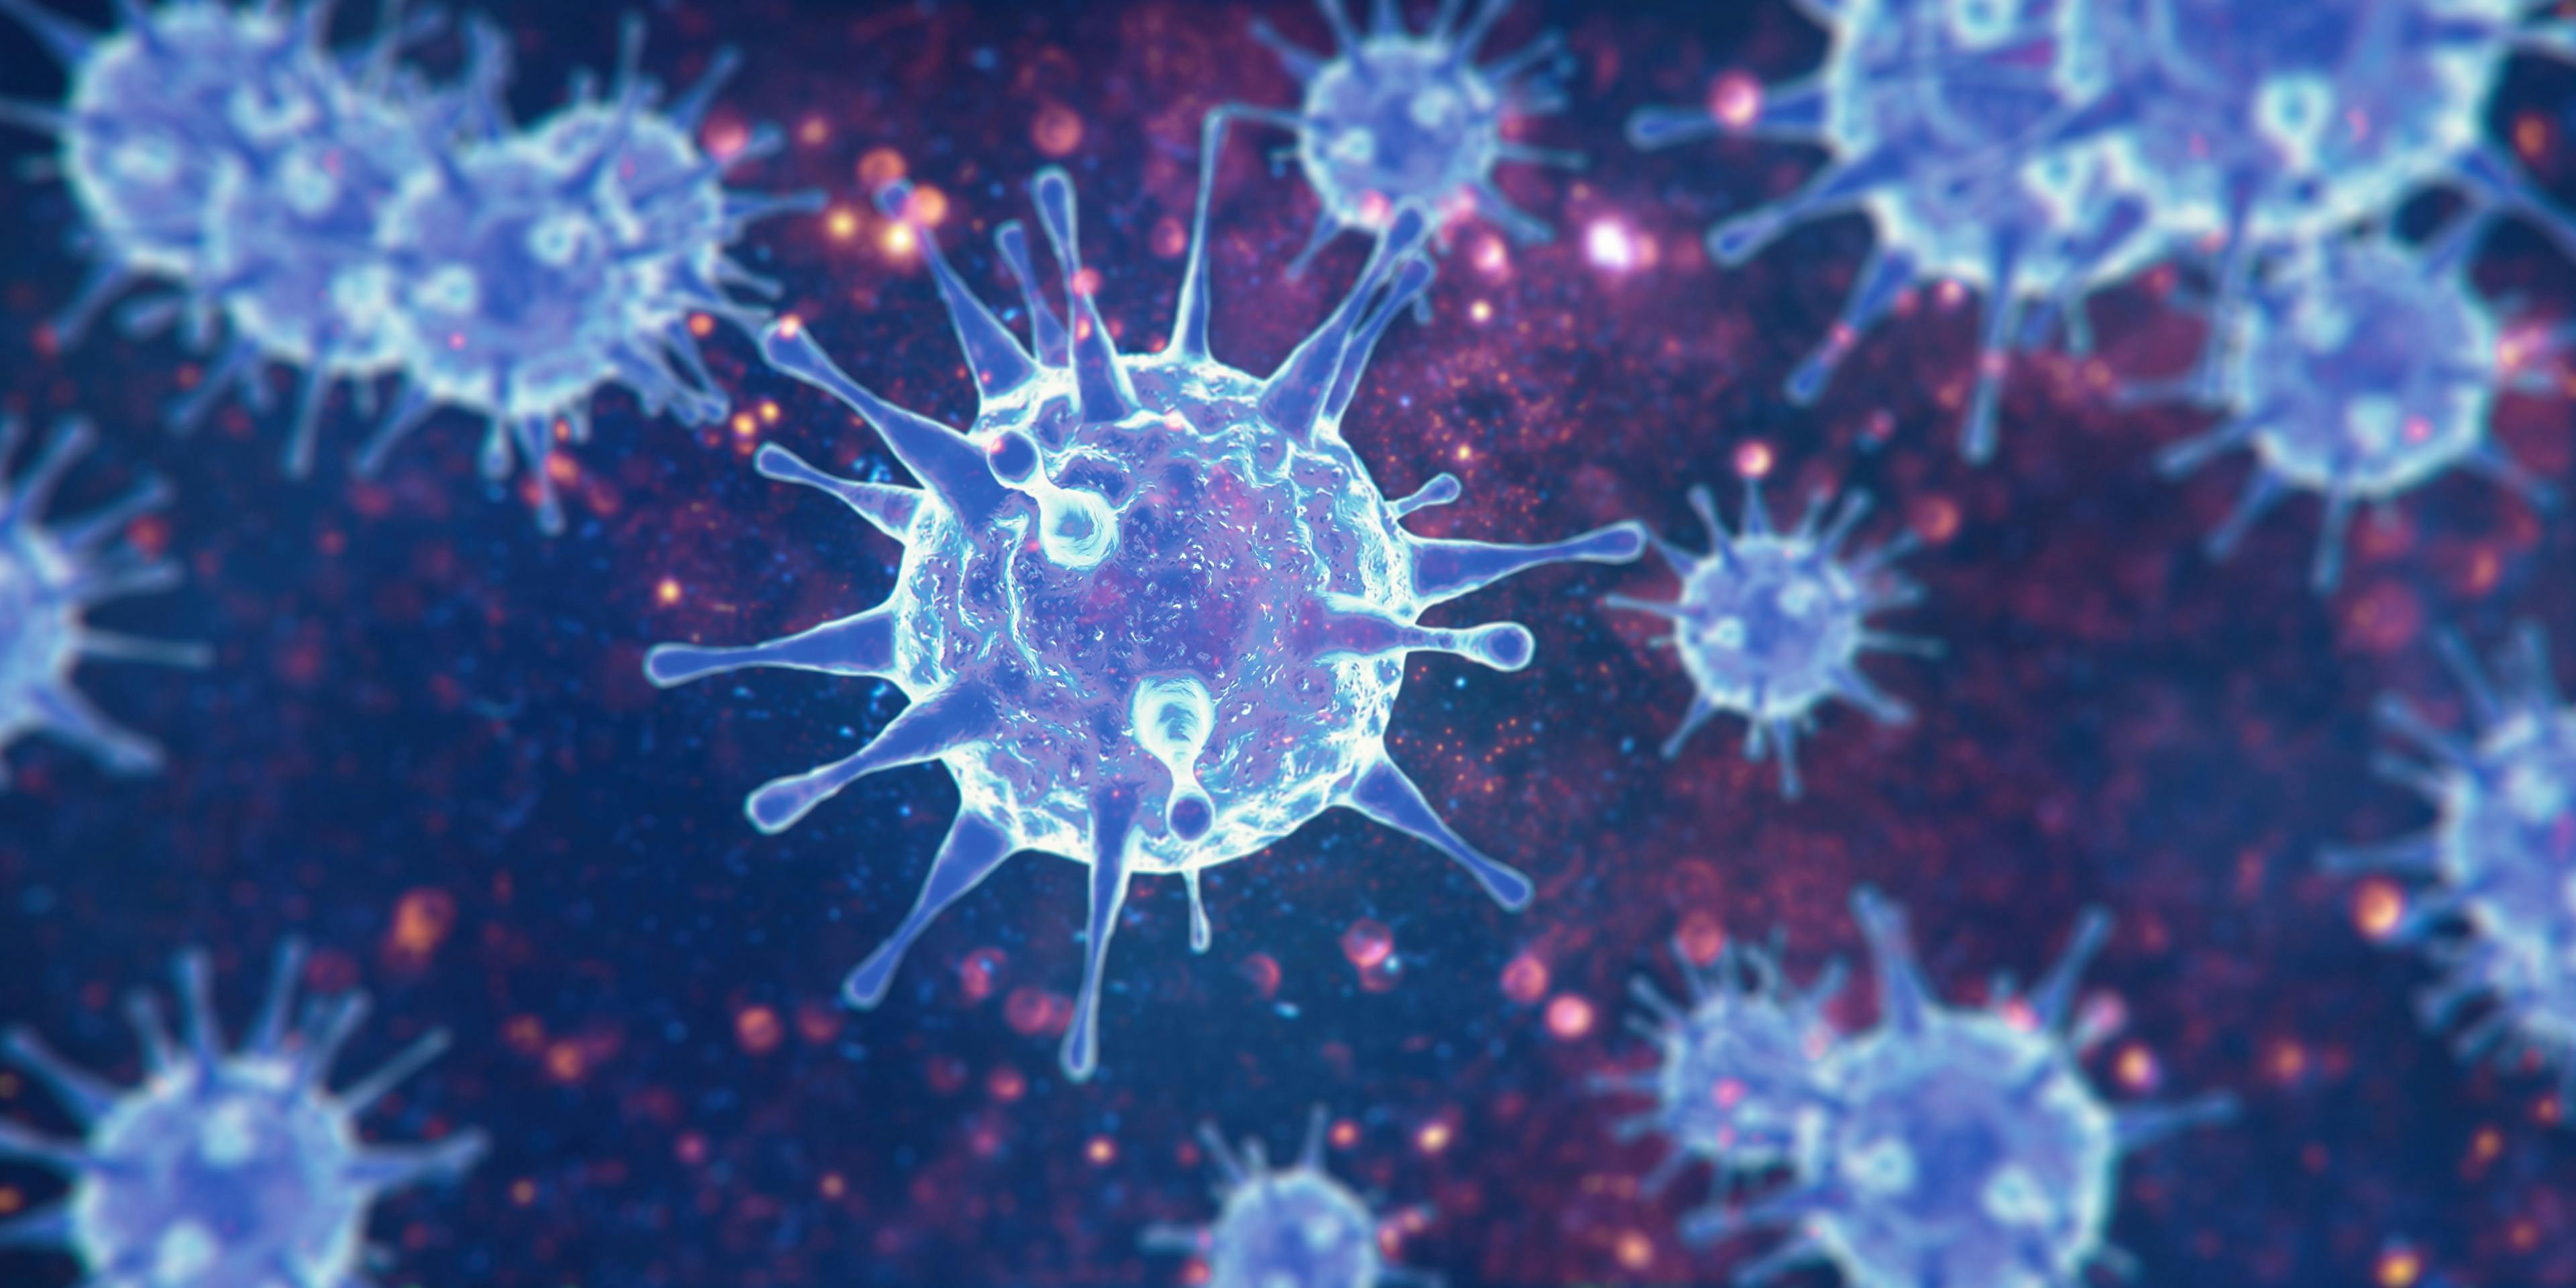 New coronavirus 2019-ncov. 3D illustration- Image credit: Thaut Images | stock.adobe.com